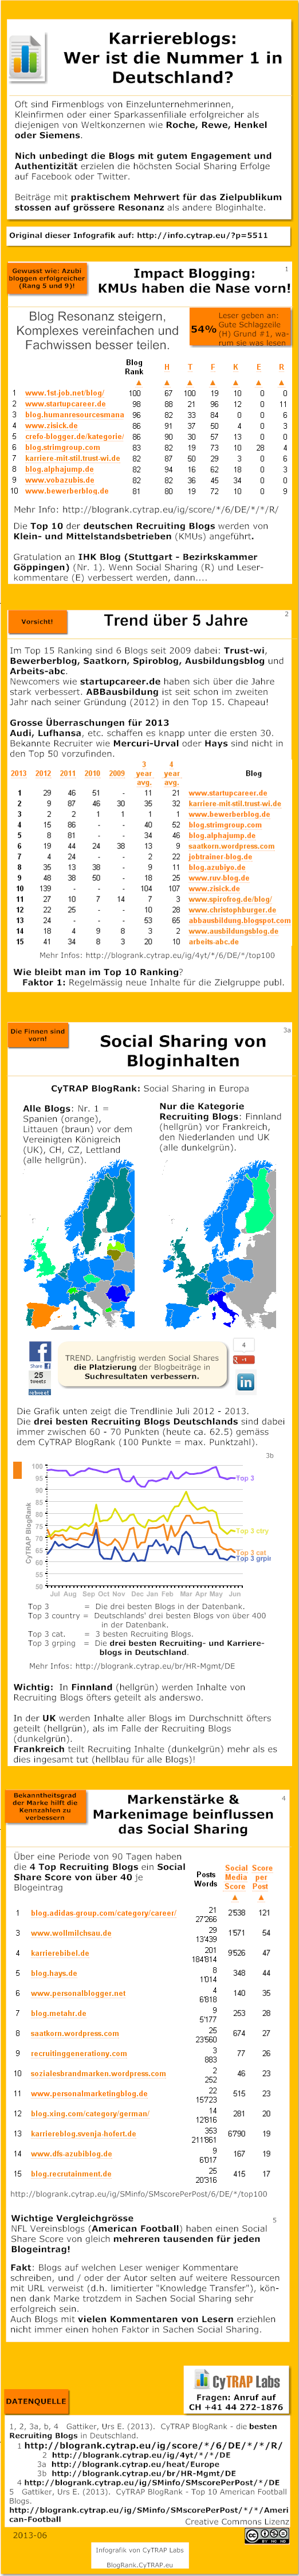 Infografik: CyTRAP BlogRank - 10 besten Personalblogs Deutschlands http://info.drkpi.ch/articles/2013-ratgeber-personalsuche-3